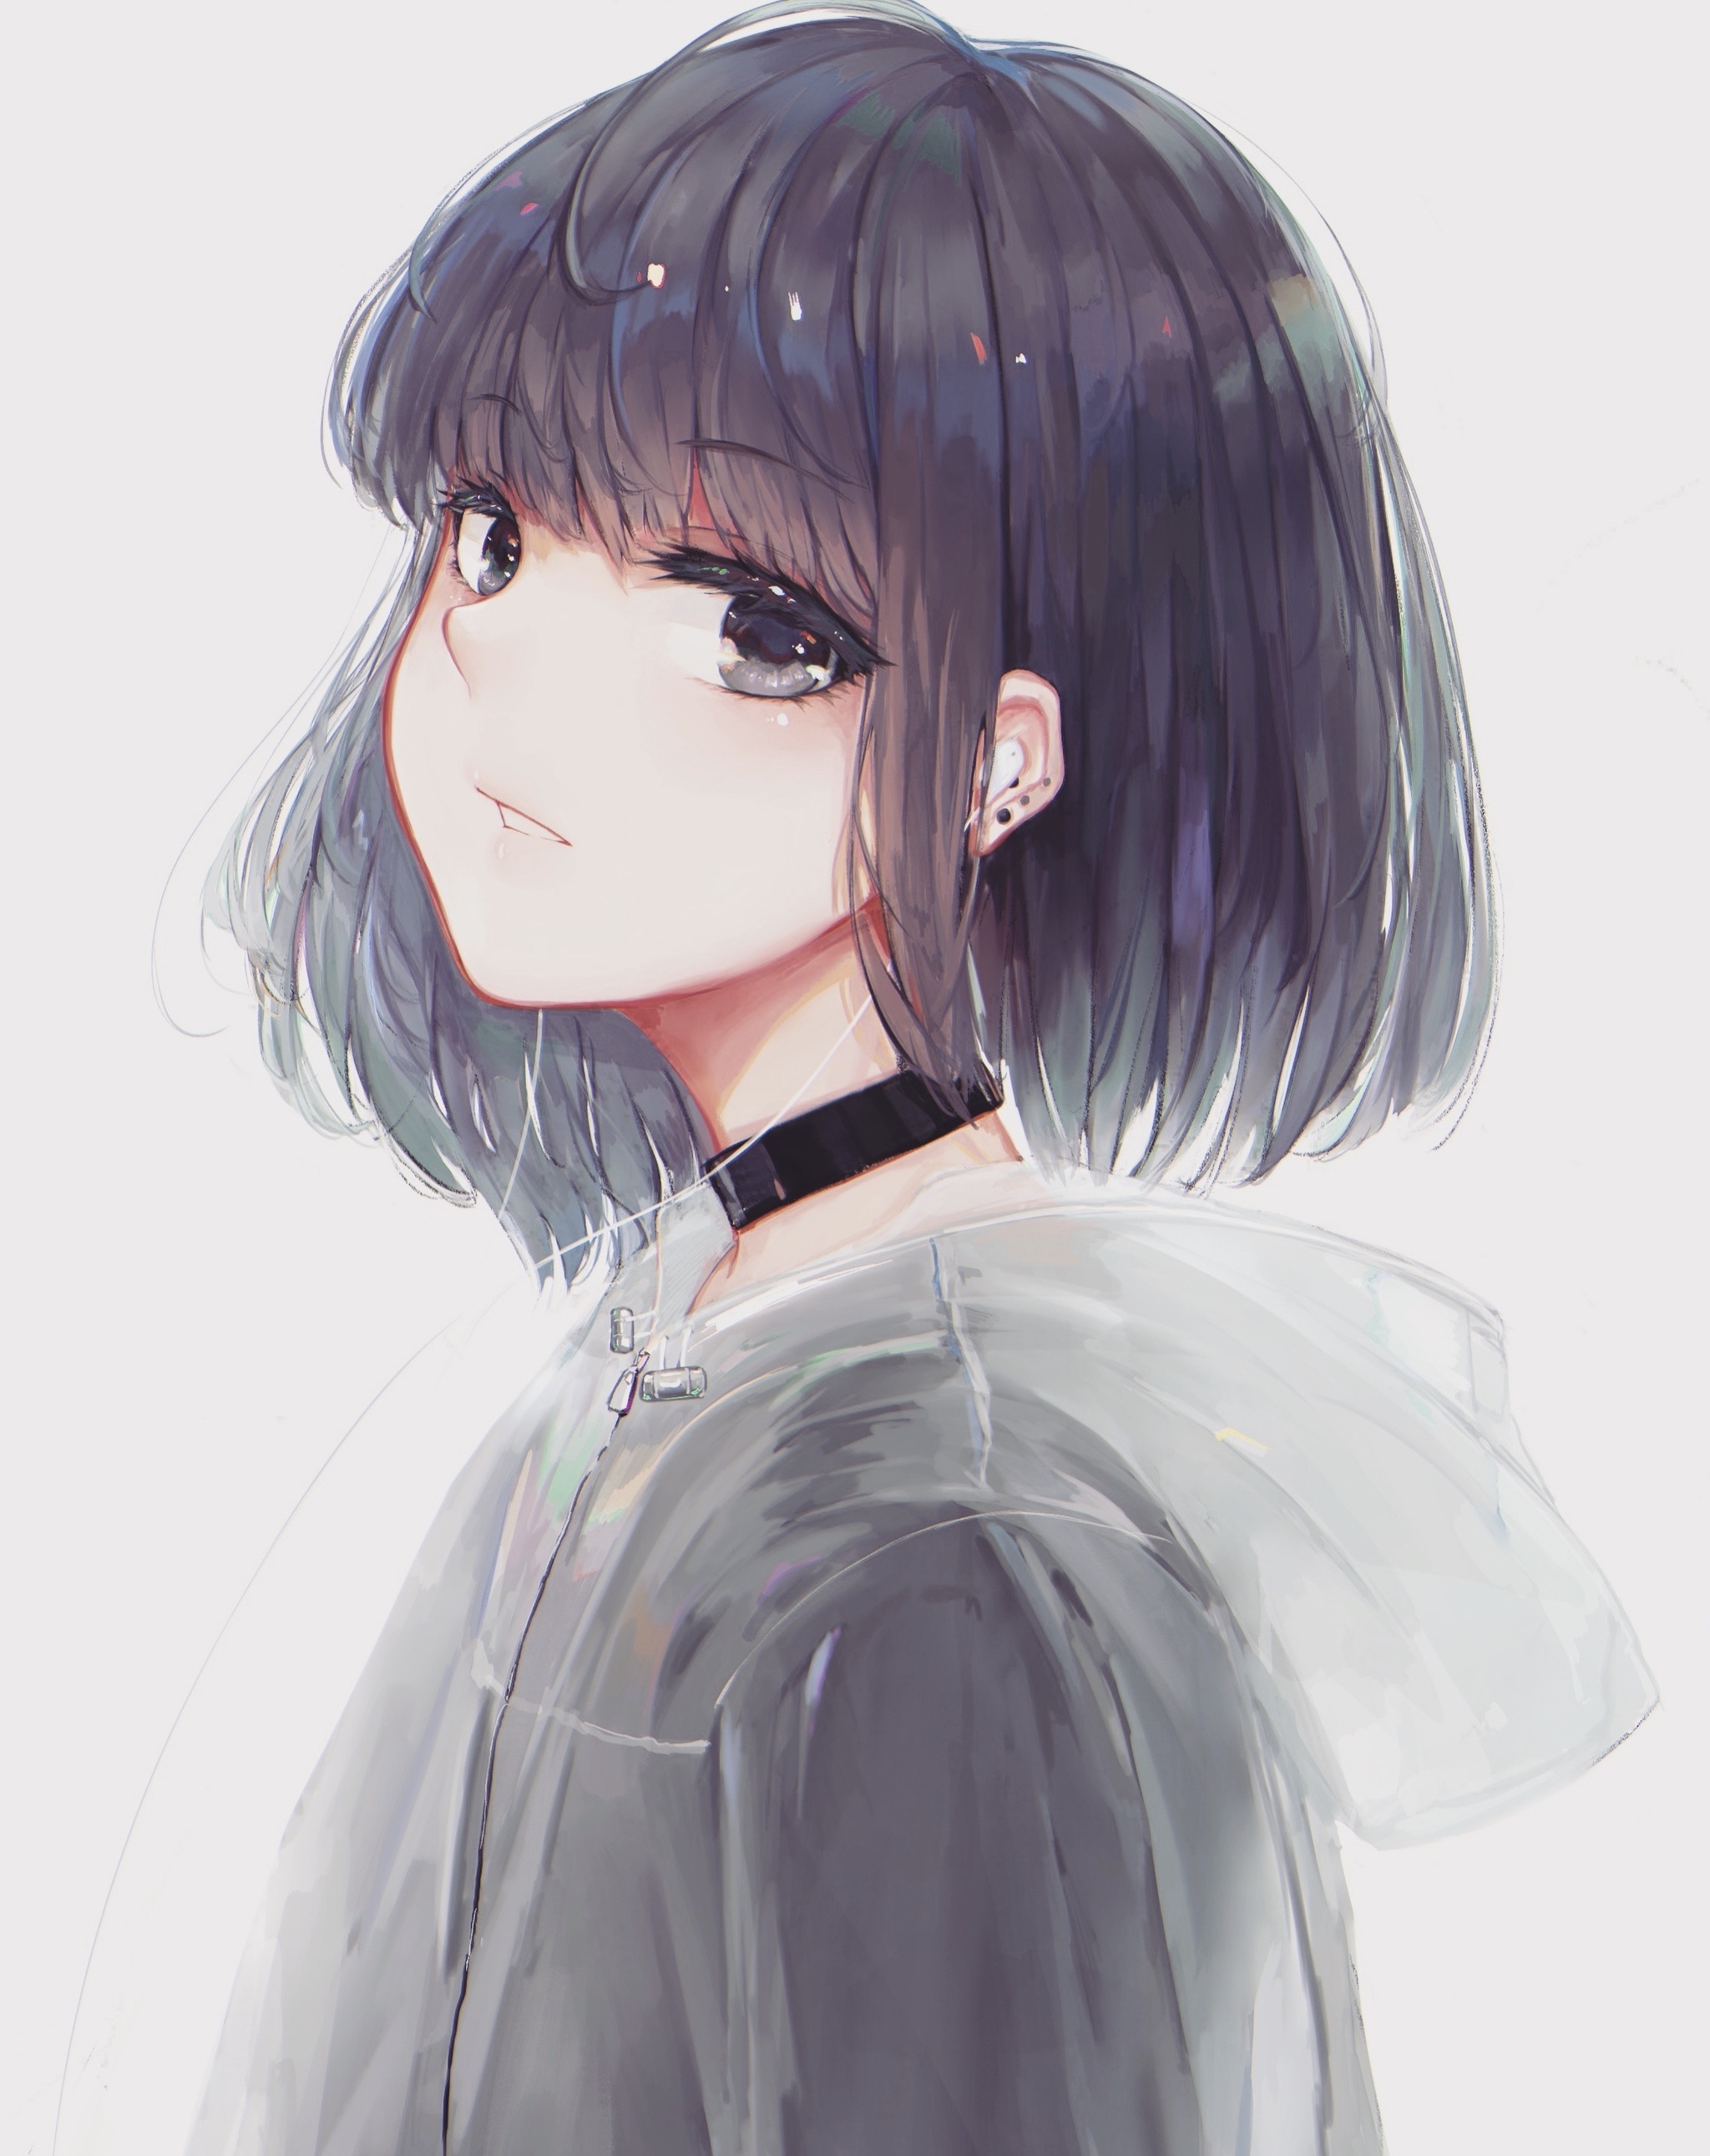 Wallpaper Profile View, Anime Girl, Choker, Short Hair, Coat:2048x2582